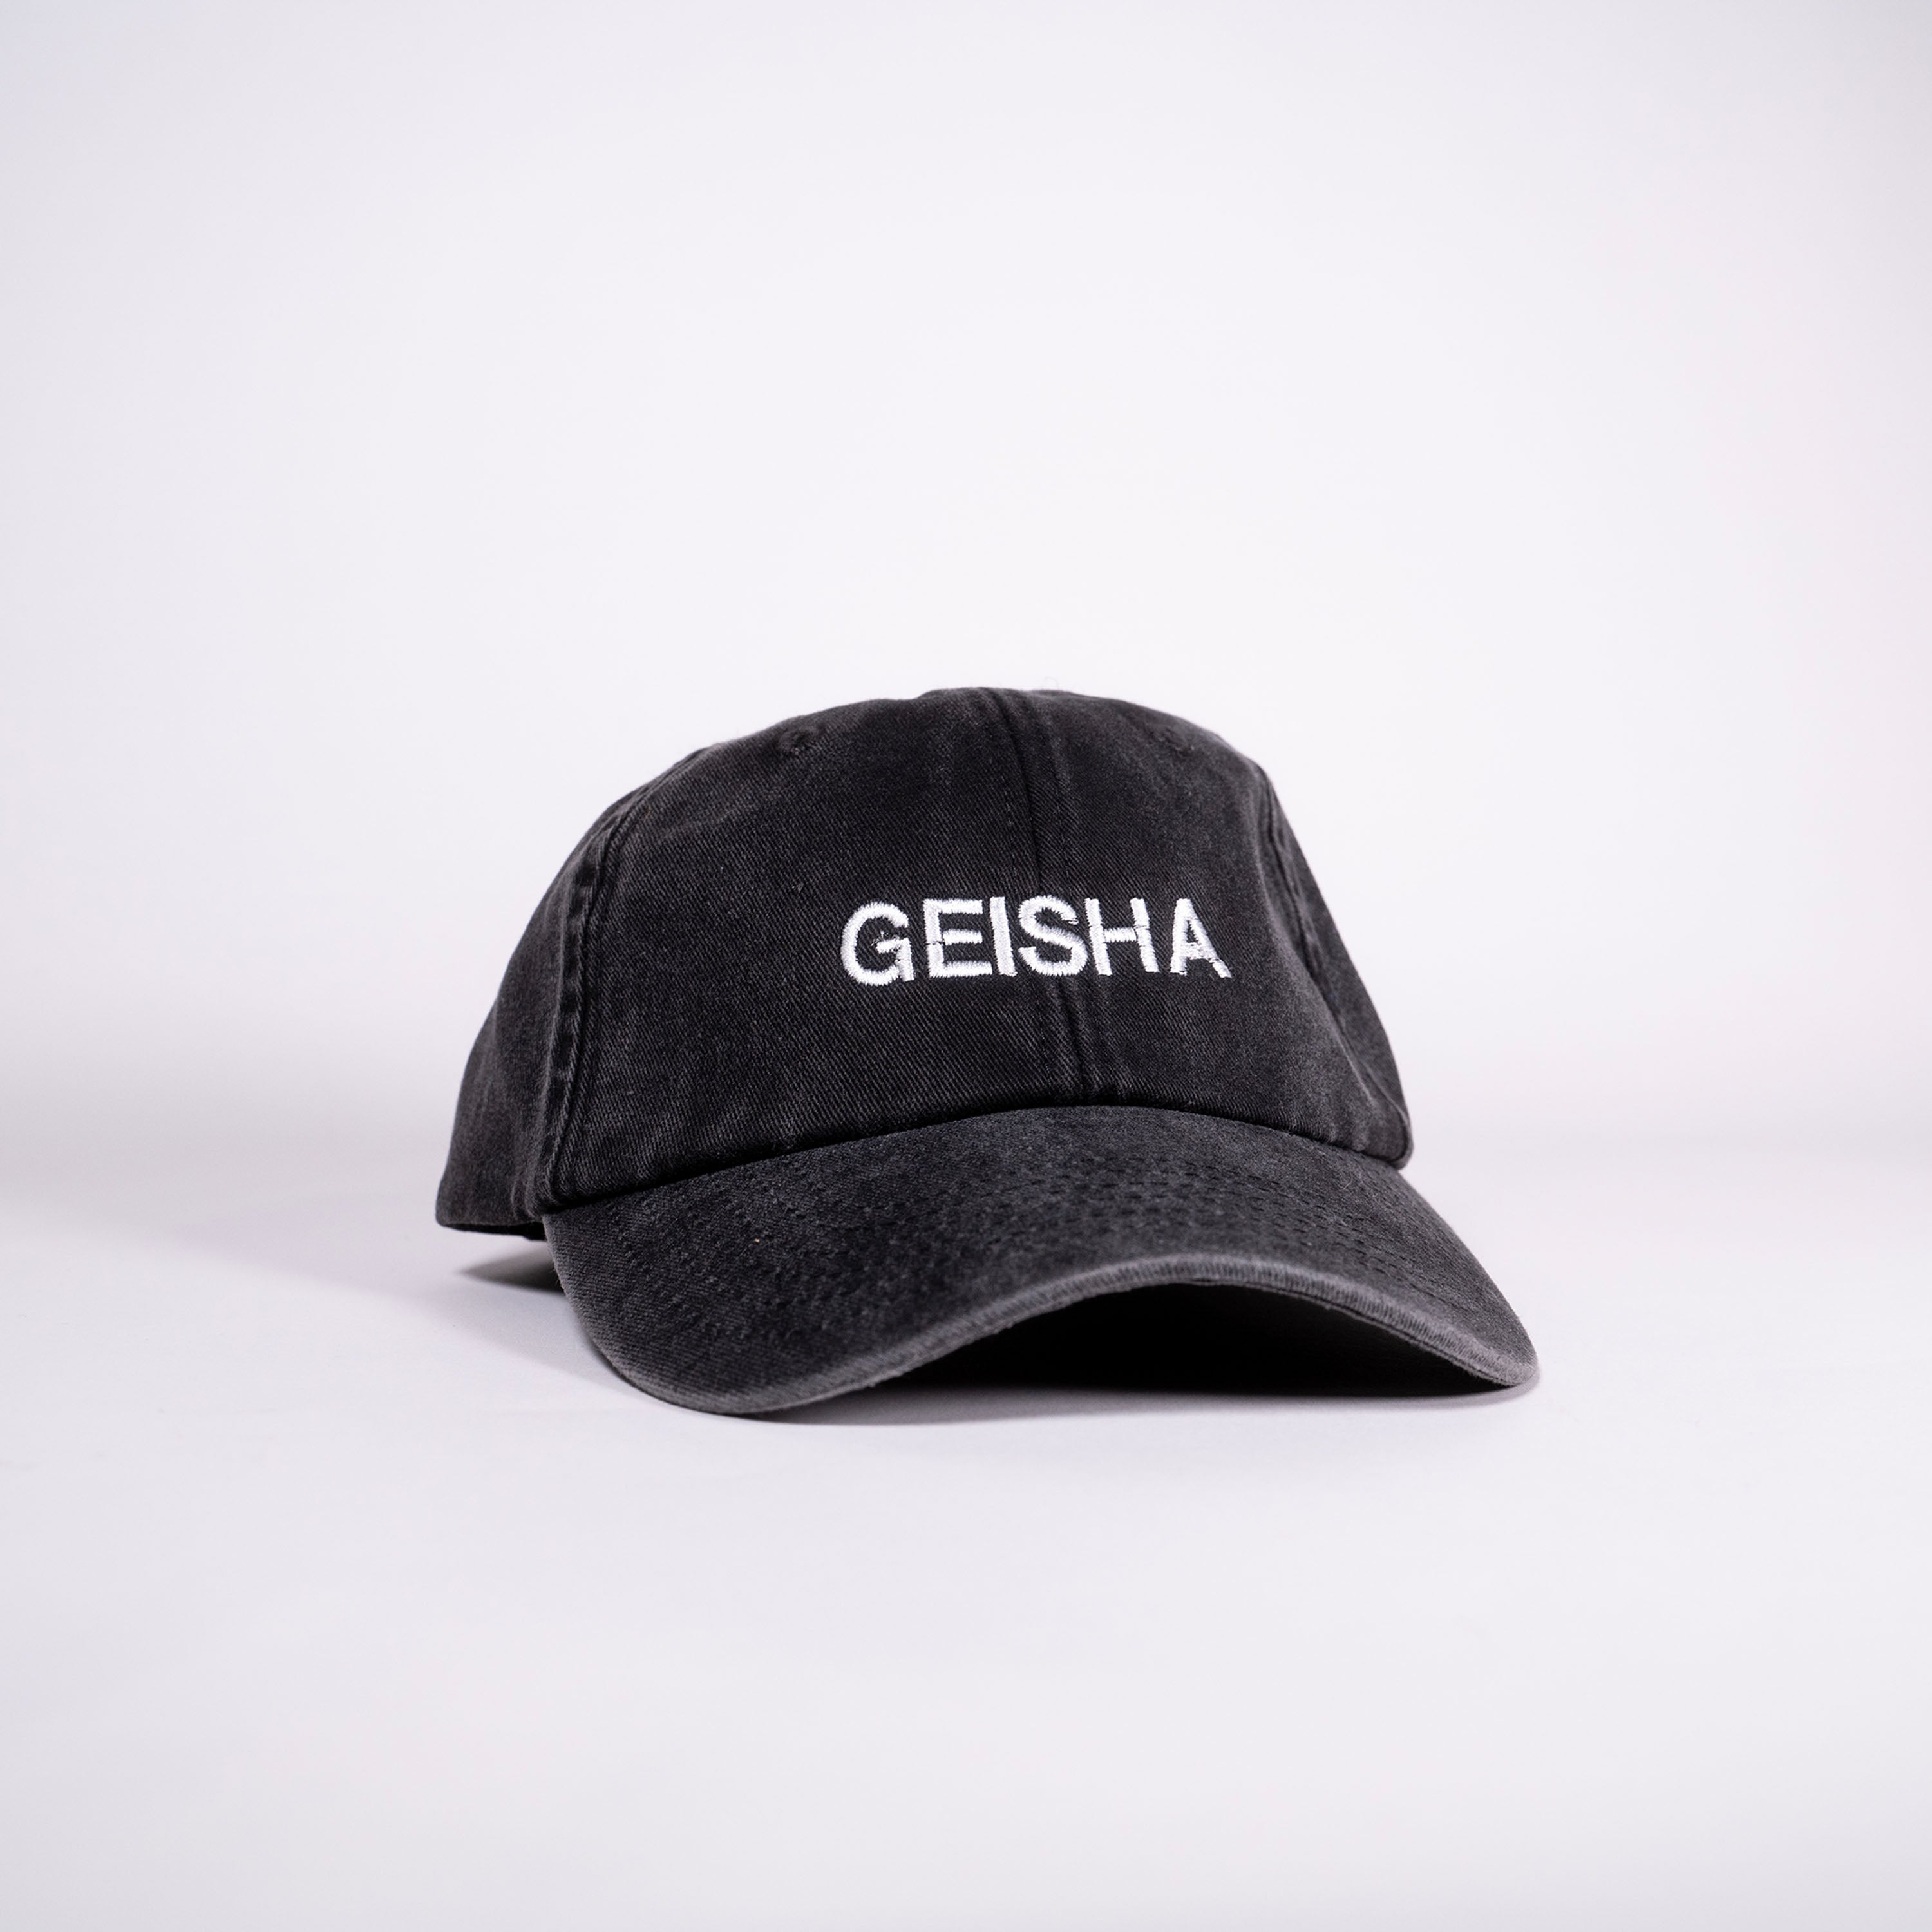 Geisha (Washed Black) Varietal 6 Panel Cap